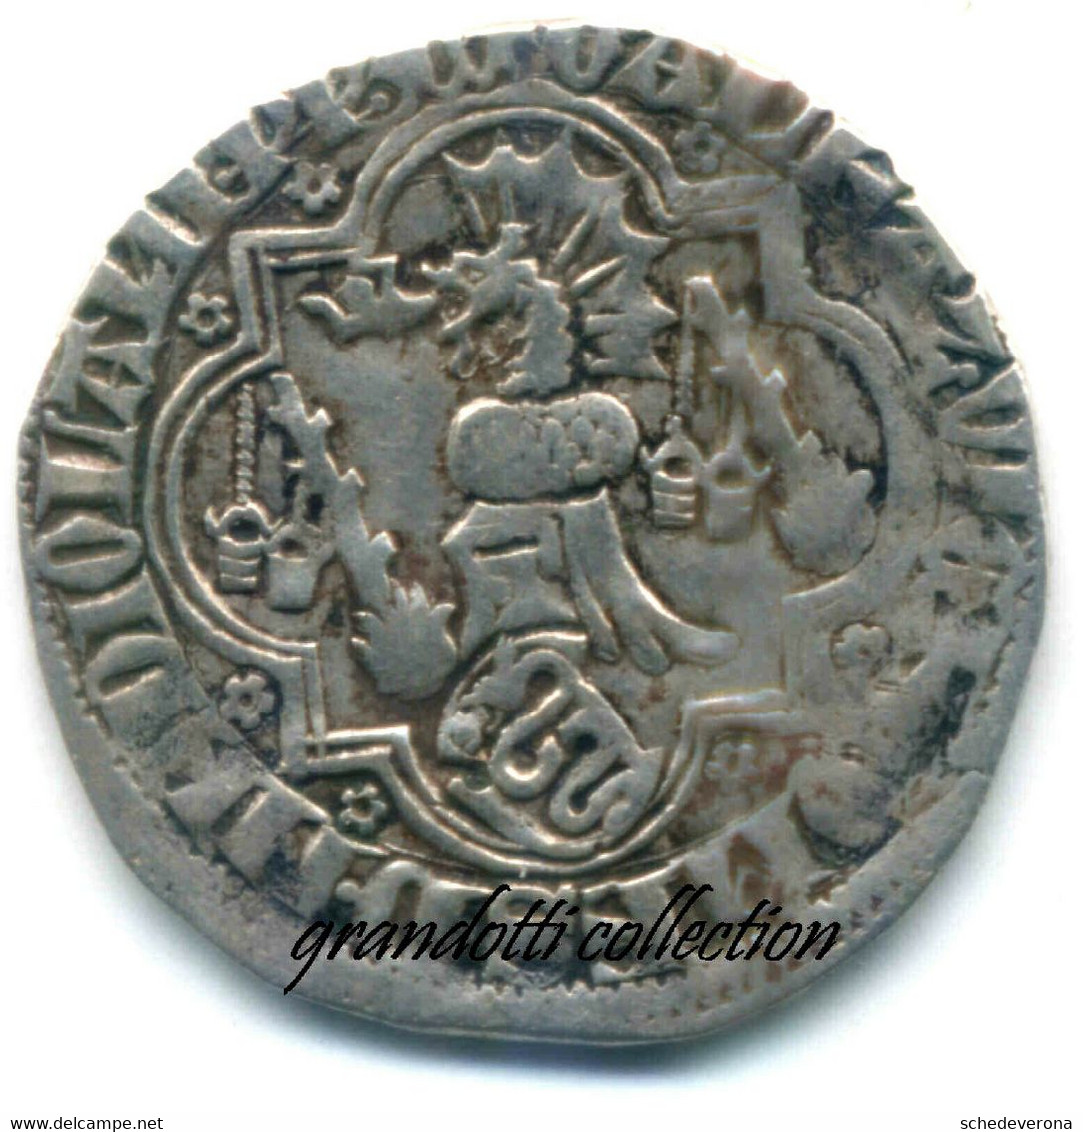 GALEAZZO II VISCONTI PAVIA GROSSO PEGIONE ARGENTO 1359 - 1378 SAN SIRO - Feudal Coins